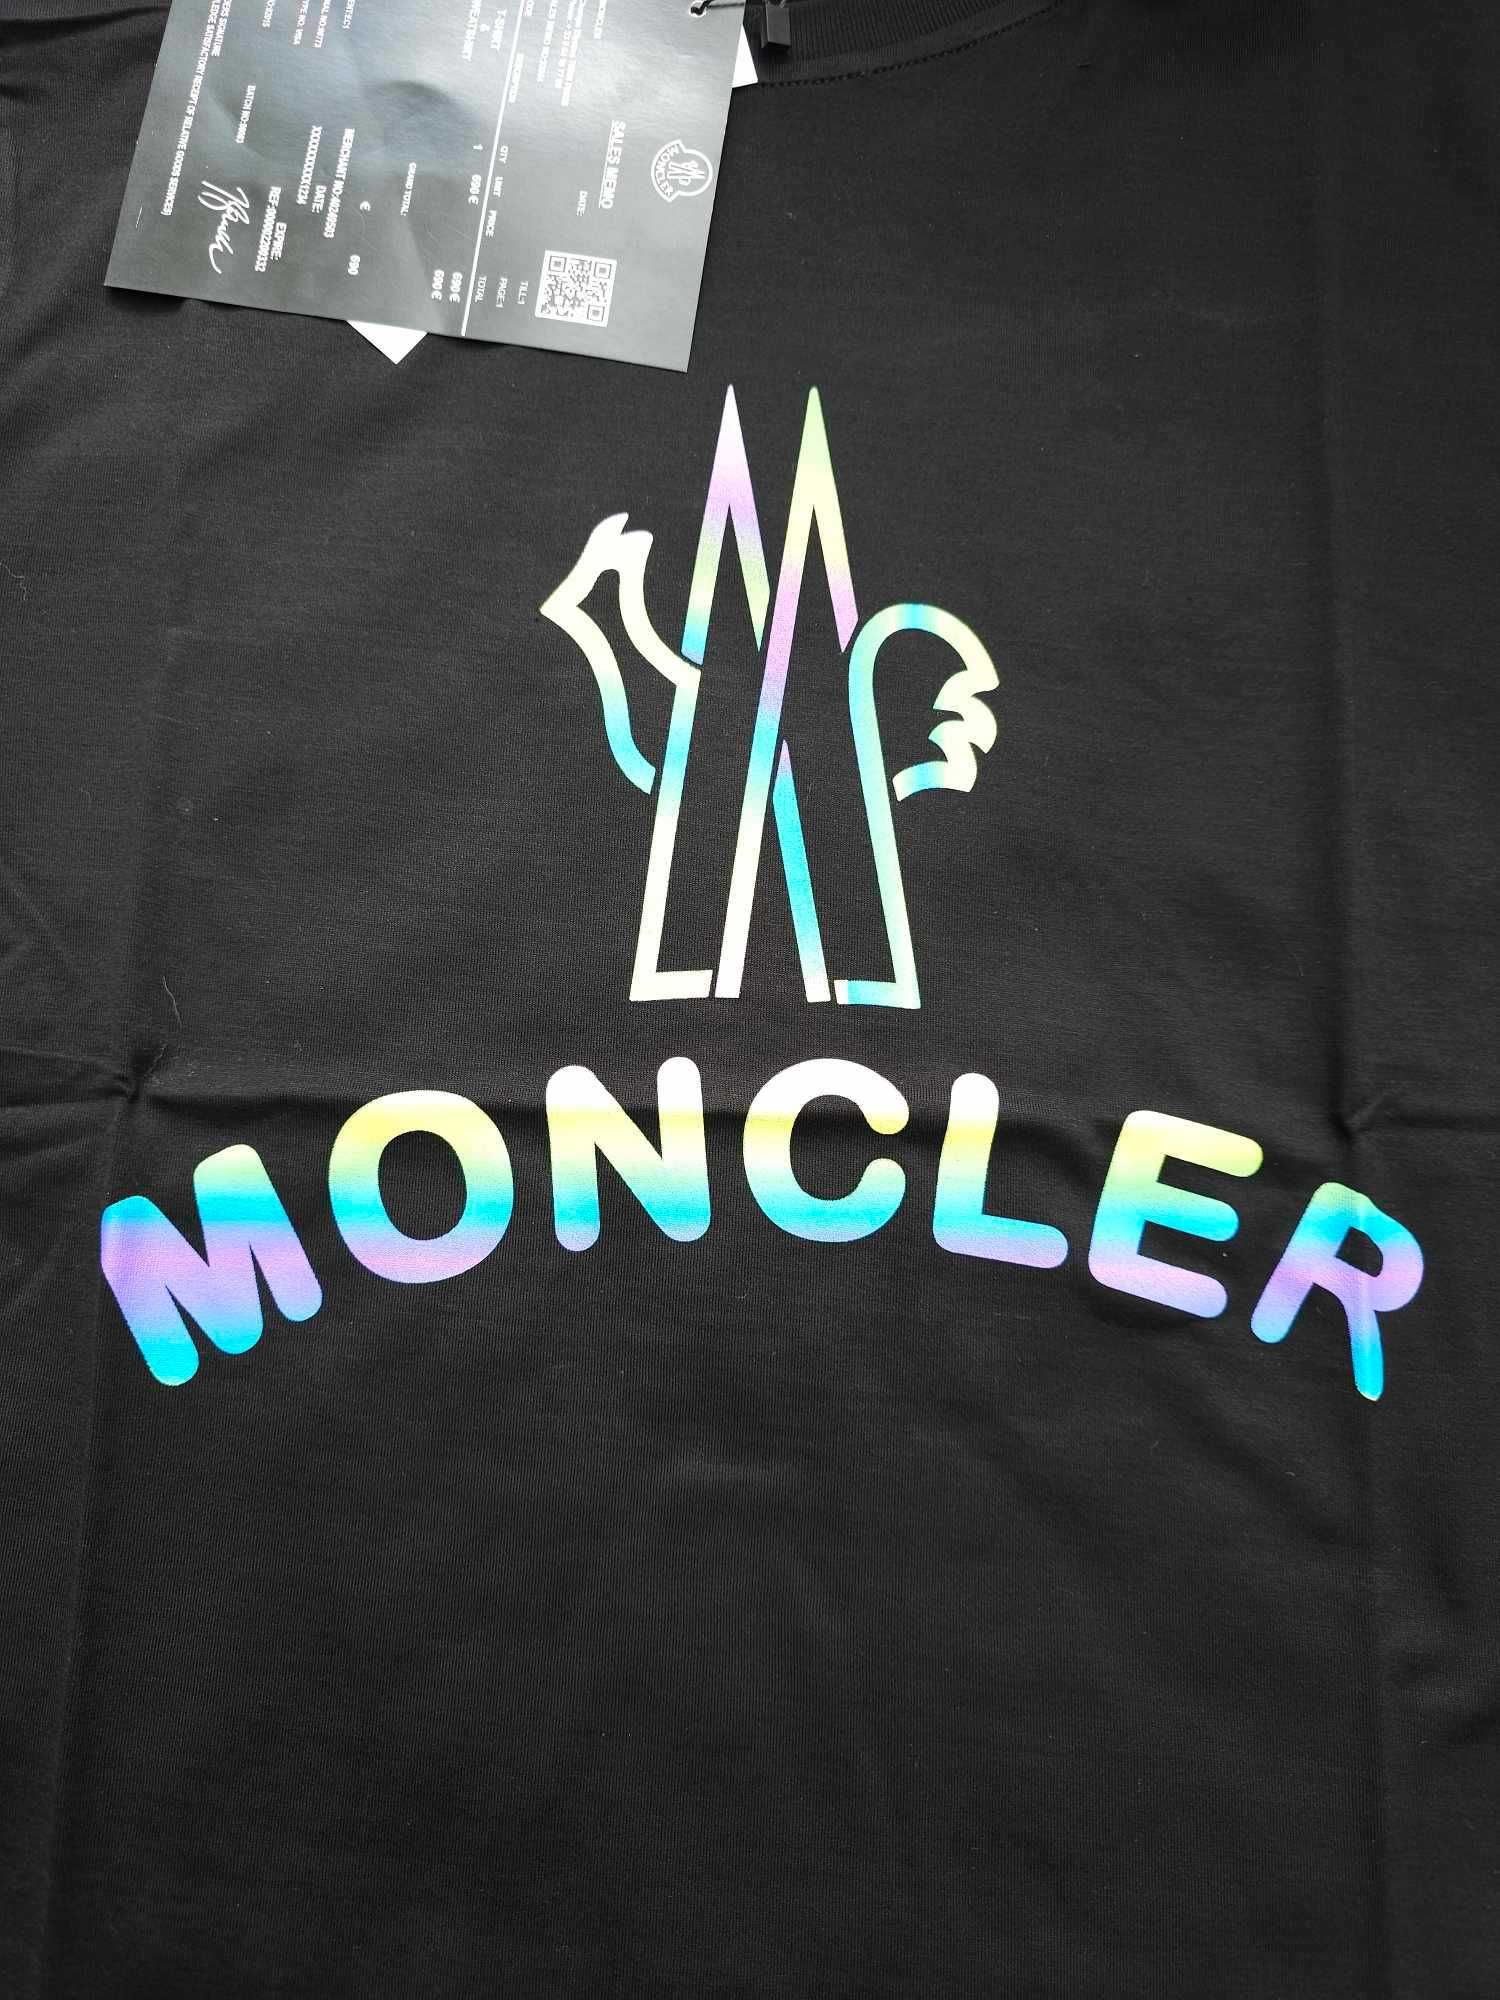 Moncler novo modelo t-shirt máxima qualidade